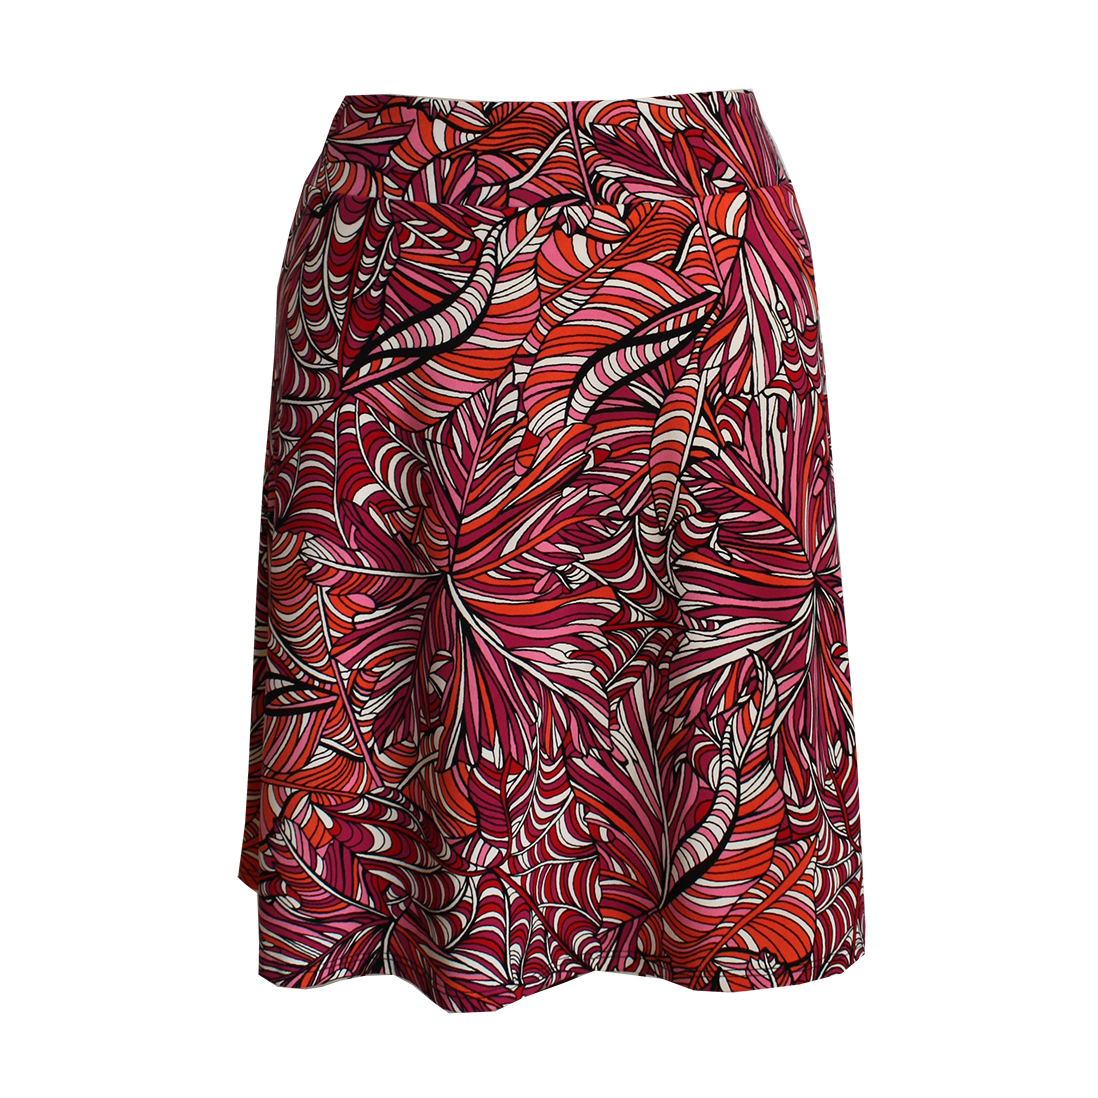 Travel Skirt in Funky Bright Print, 